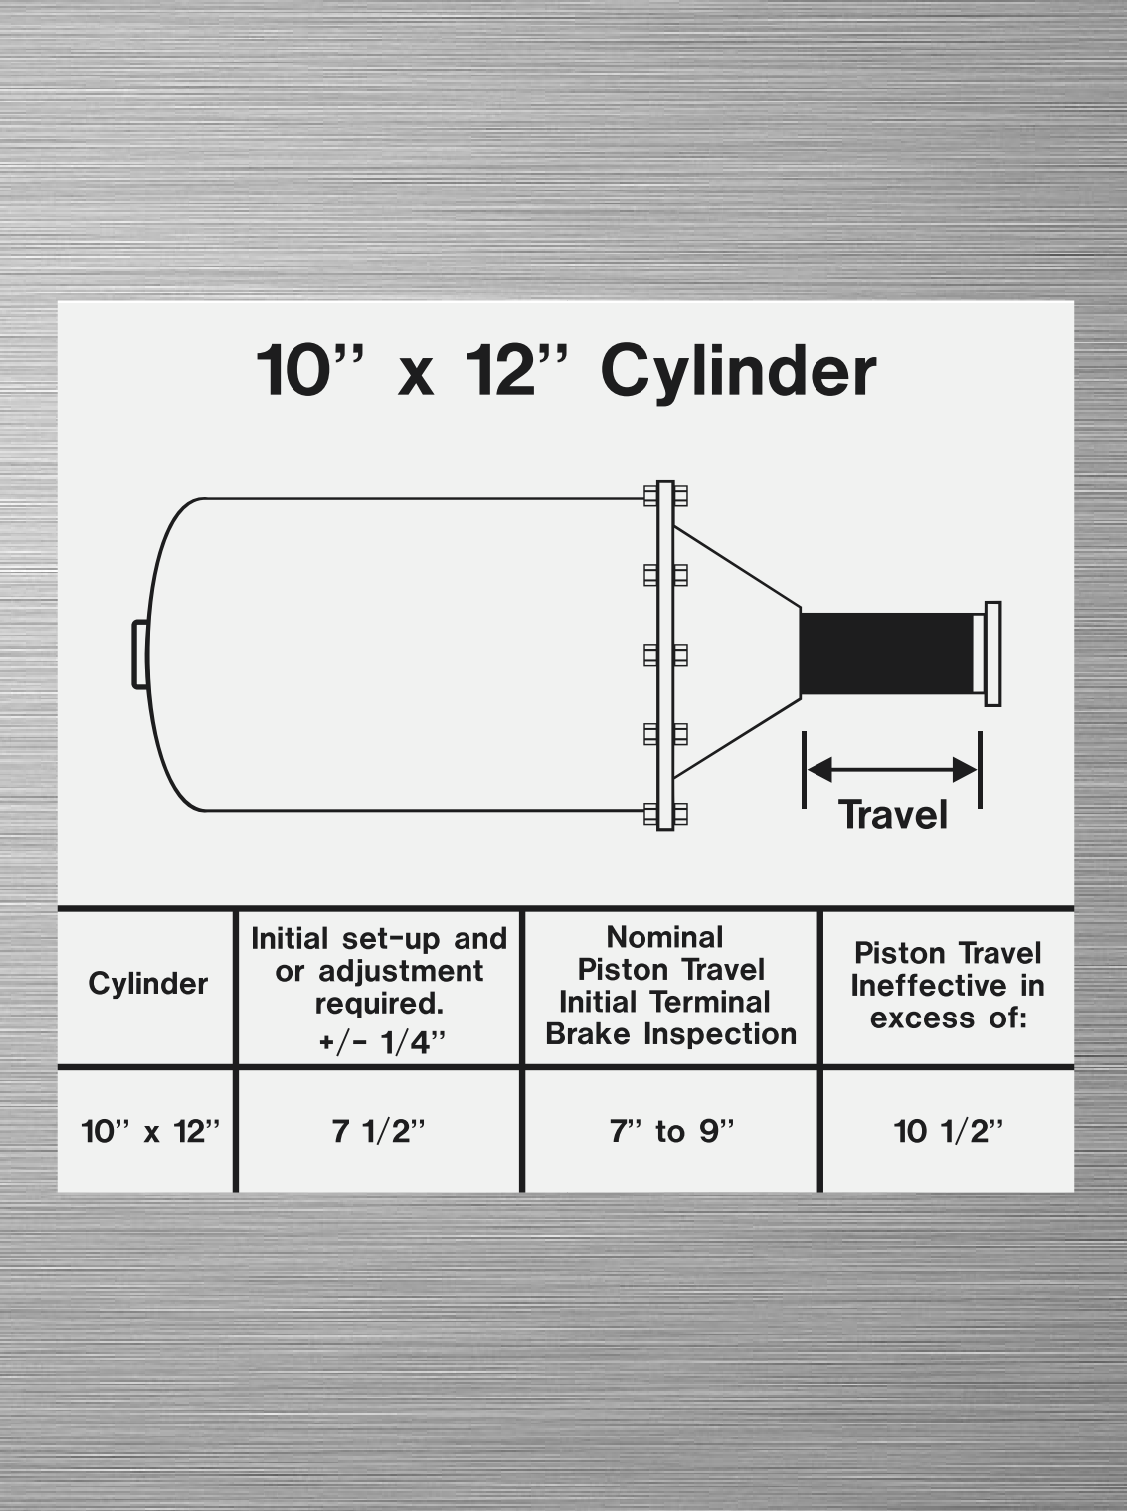 Piston Travel Decal - 10" x 12" Cylinder